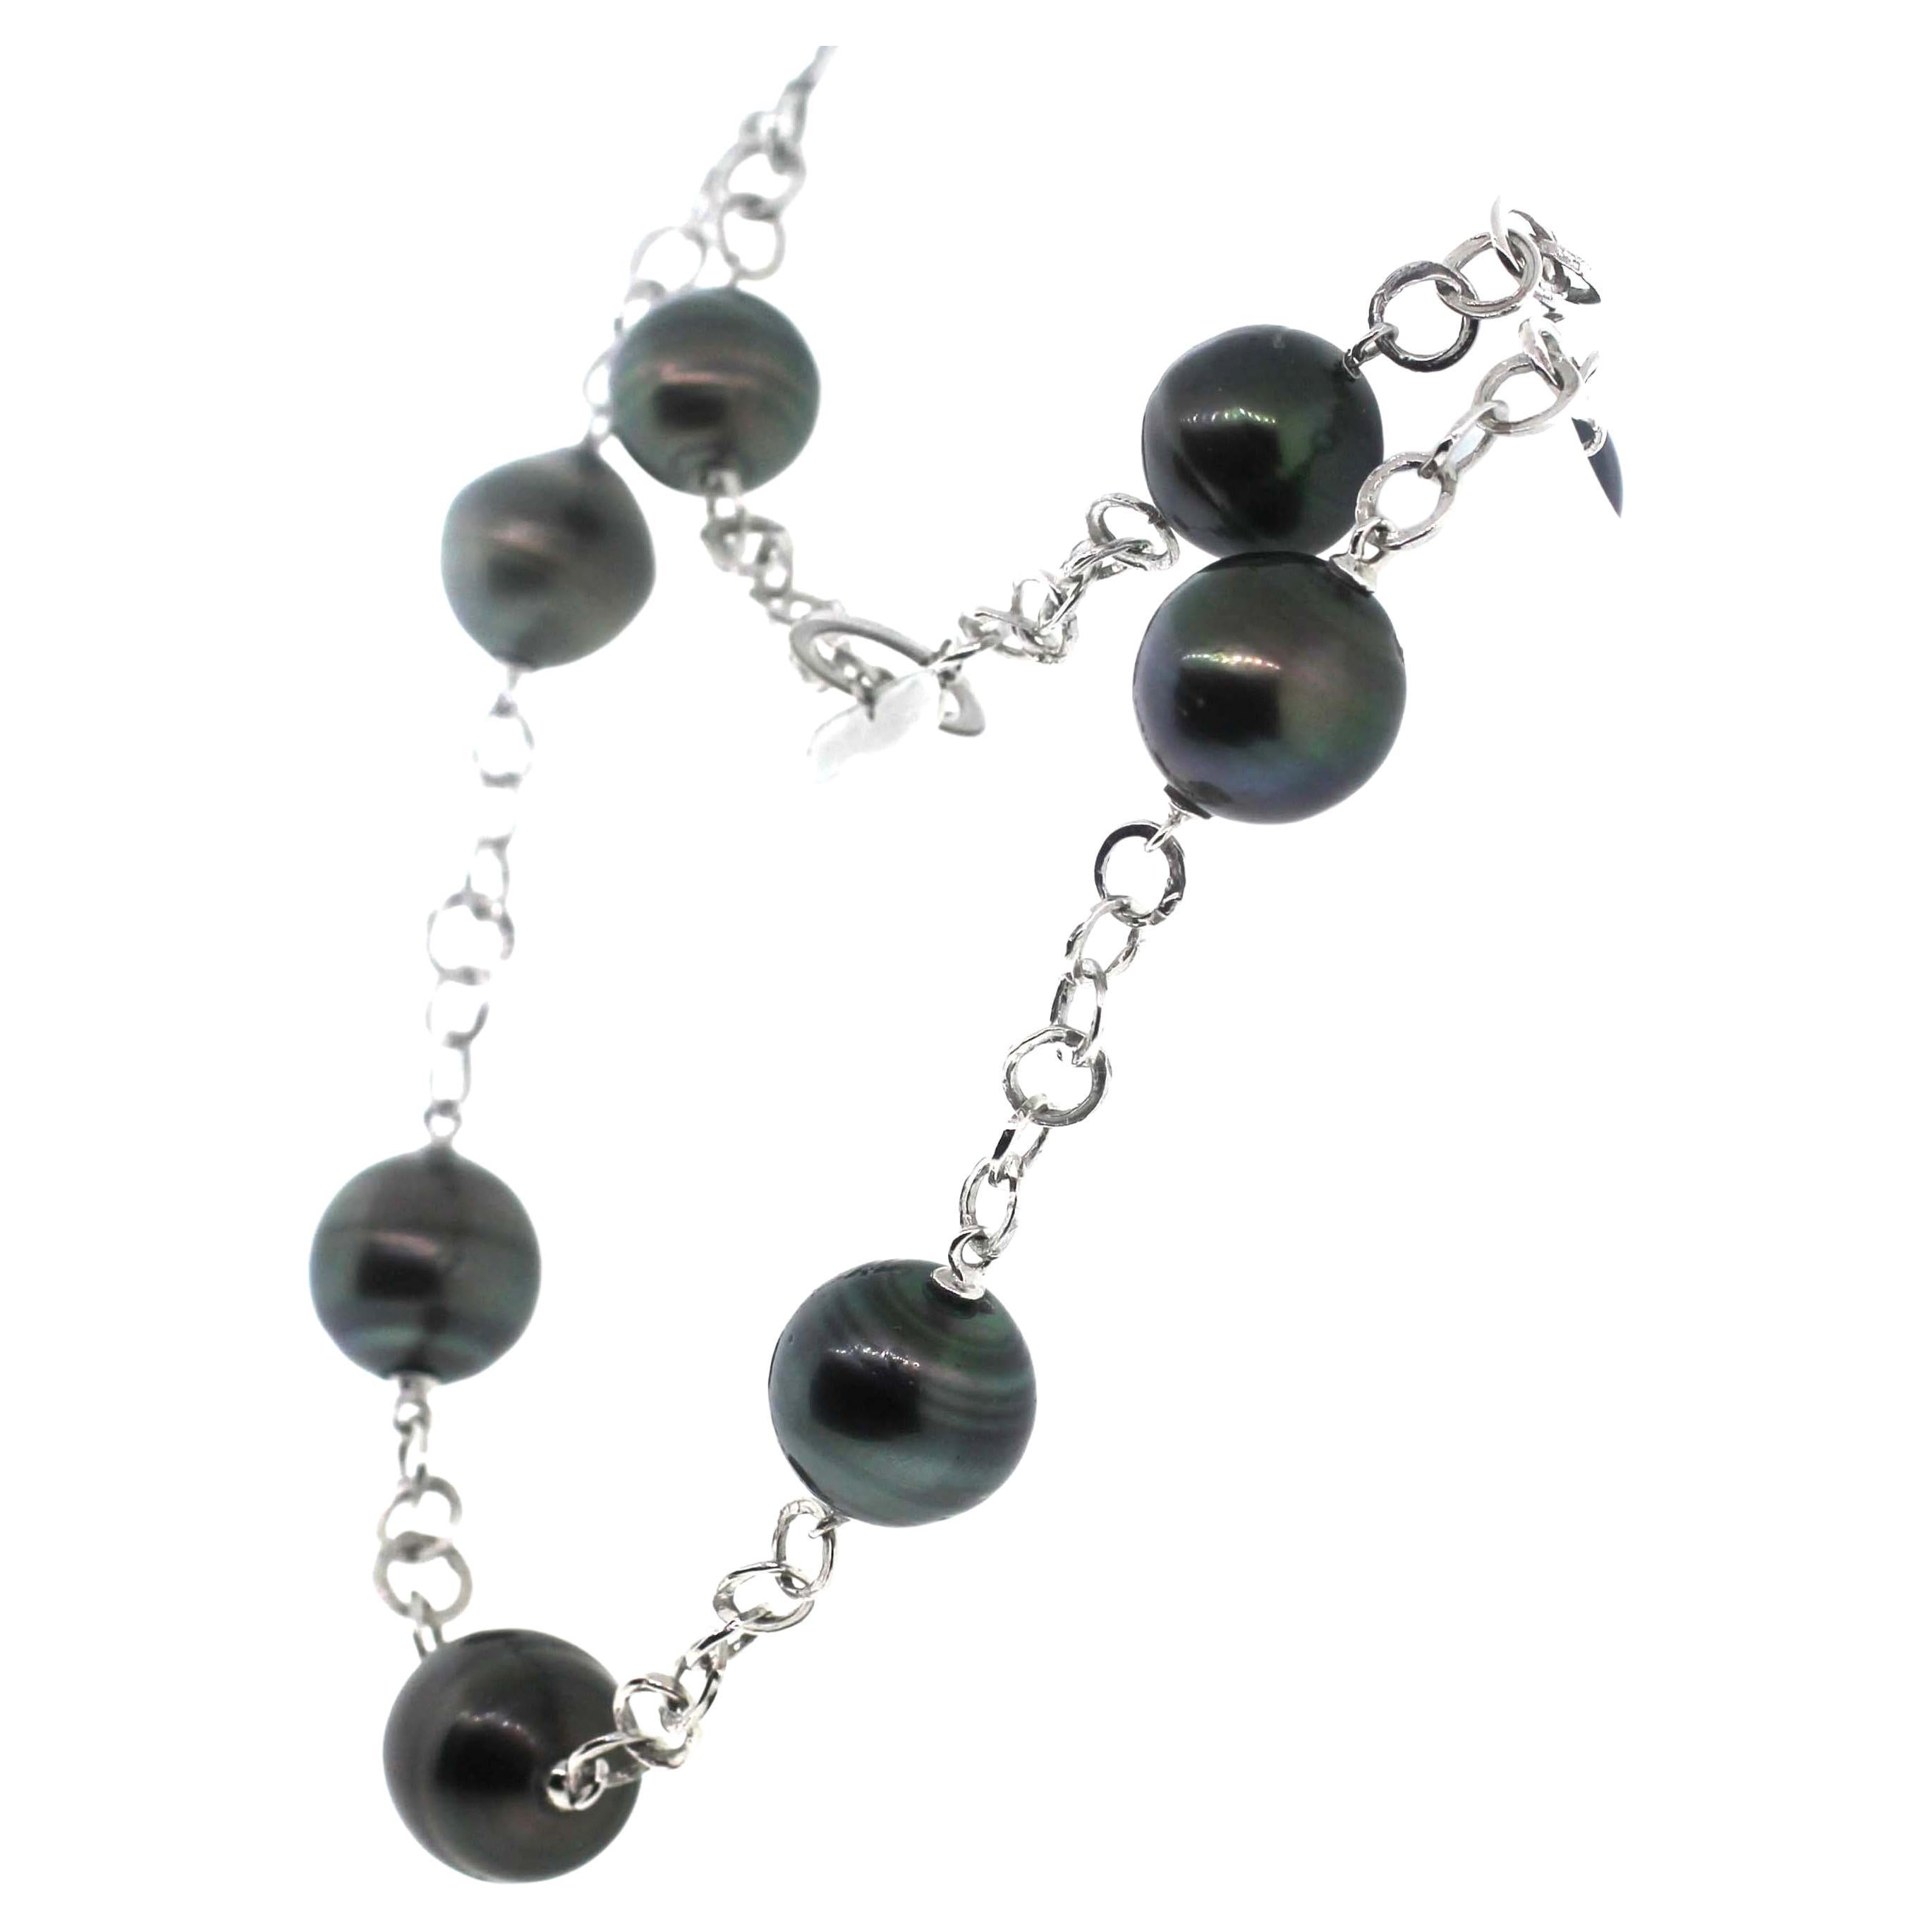 Hakimoto By Jewel Of Ocean Necklace
A Contemporary Black Tahitian South Sea Baroque Pearl 18K Necklace
24